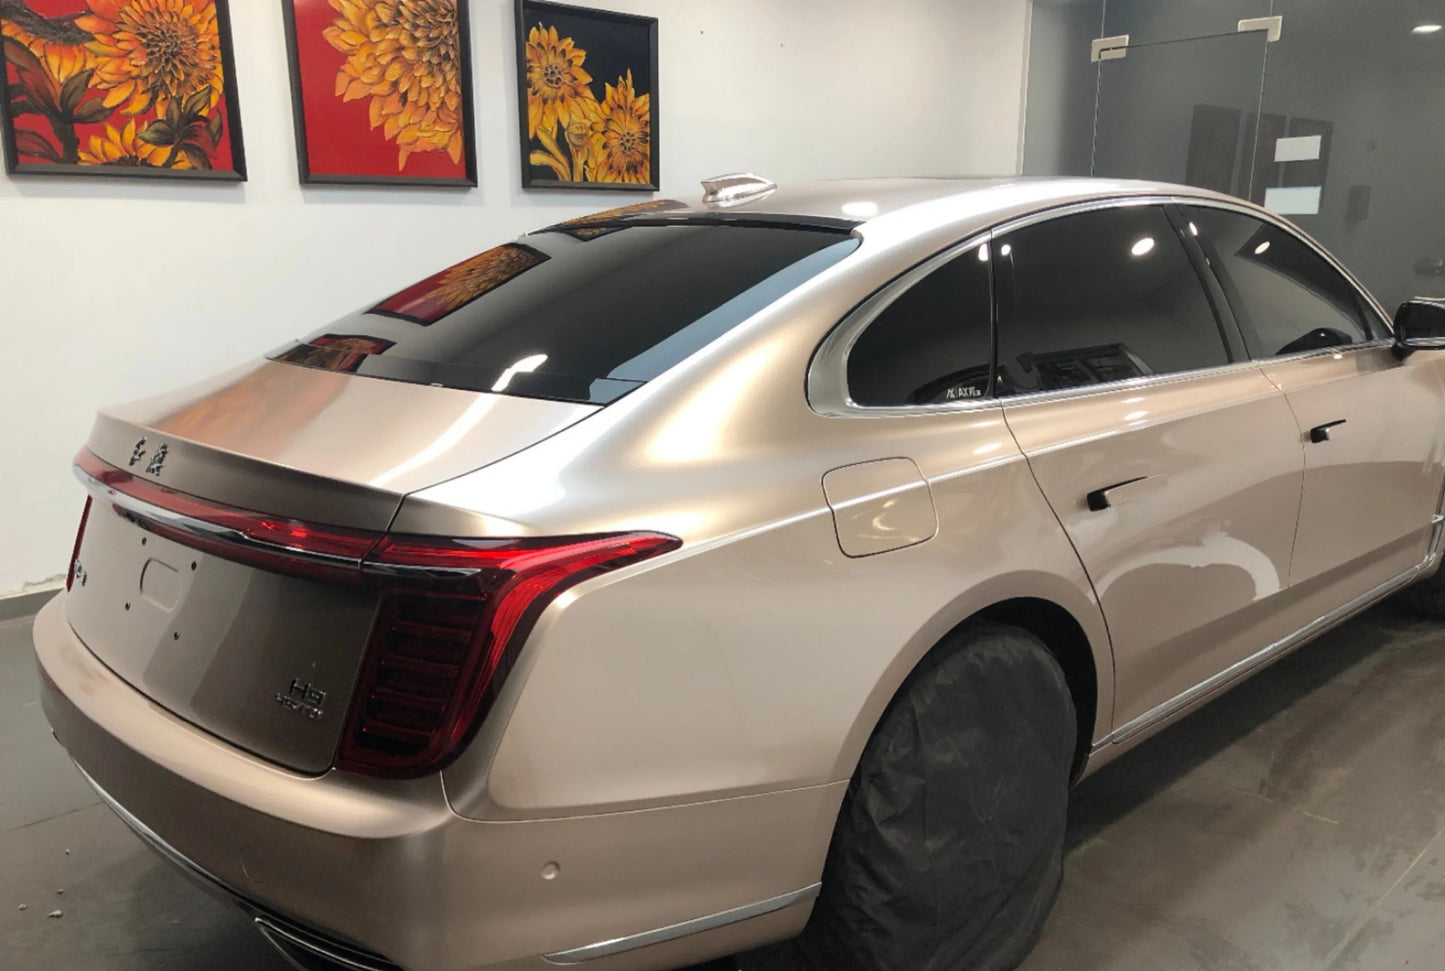 Gloss Metallic Amber Gold Car Wrap – RAXTiFY